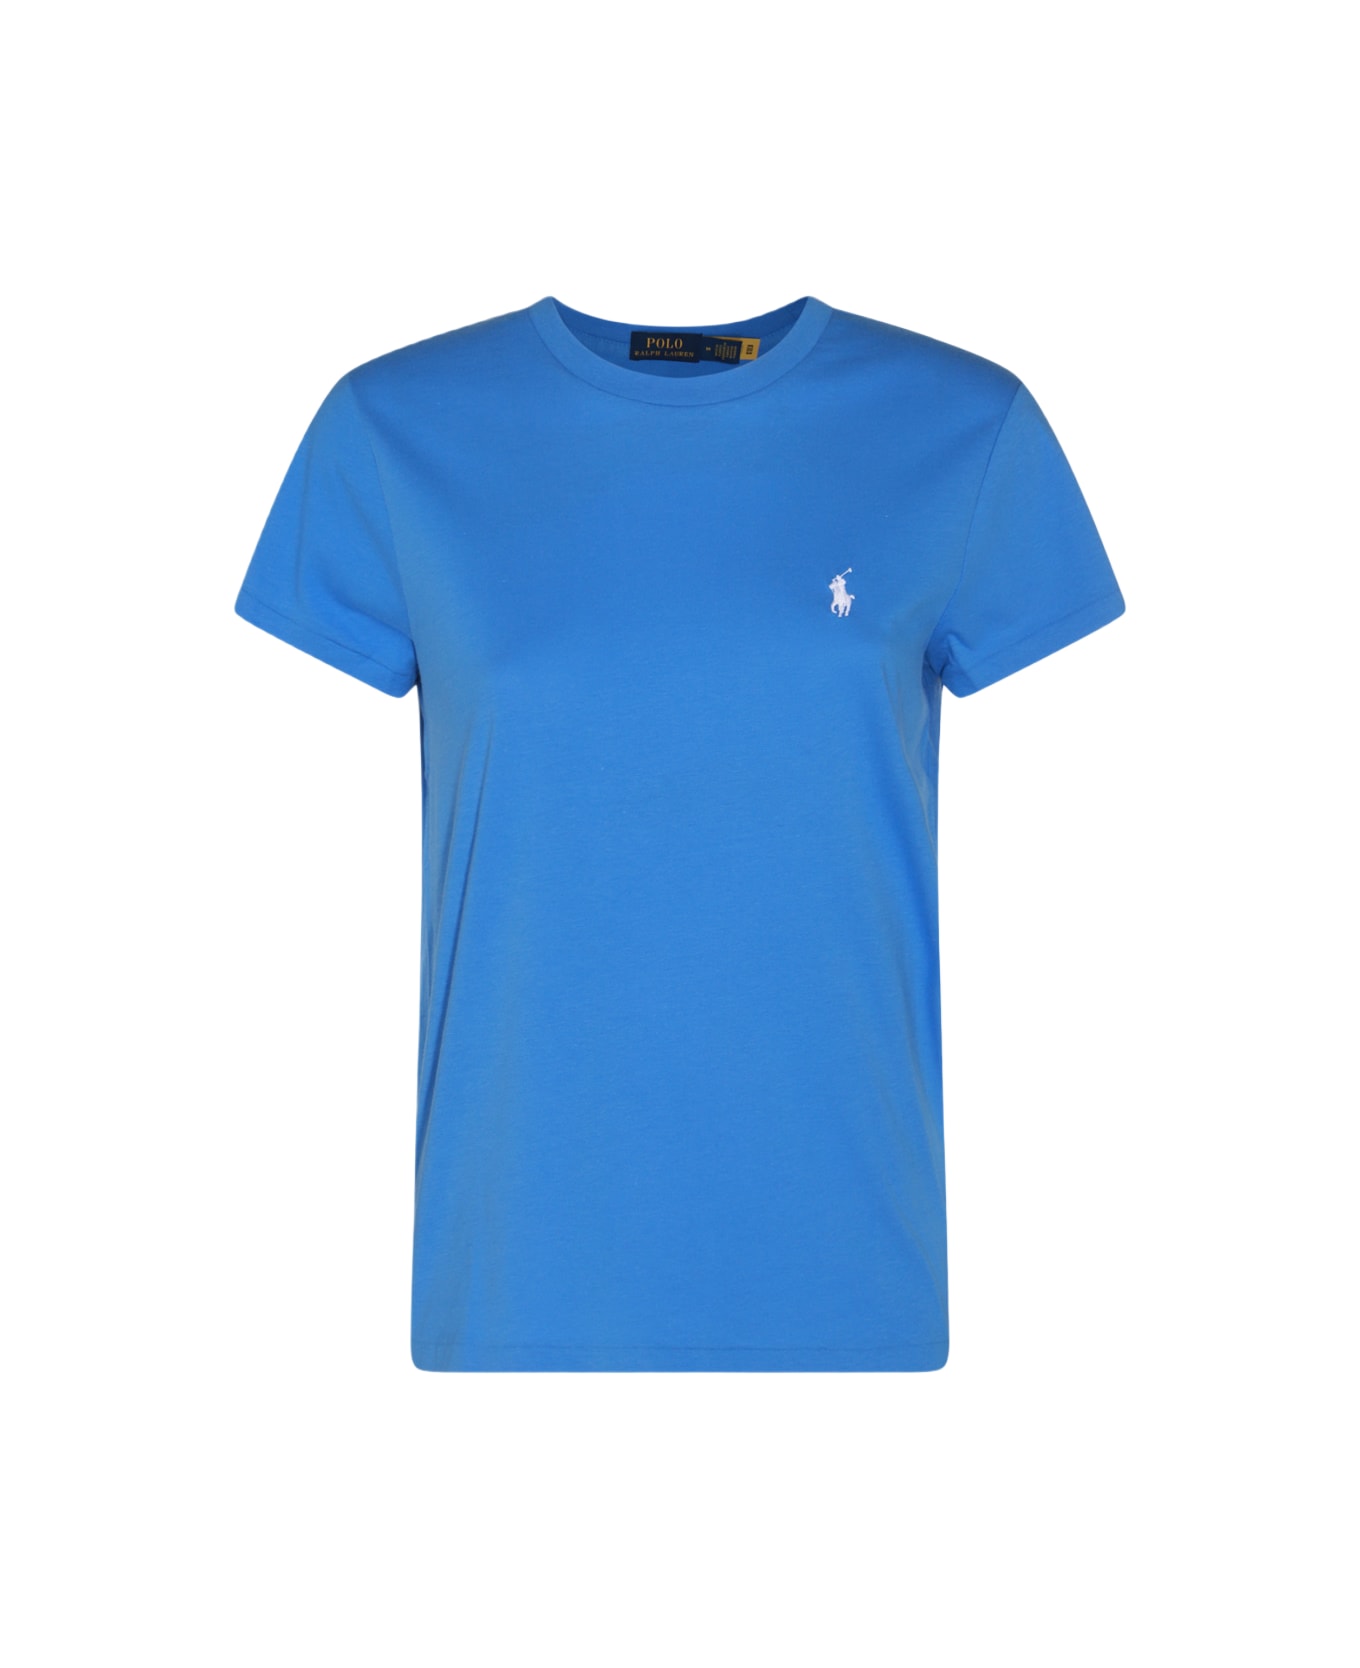 Polo Ralph Lauren Cobalt Blue And White Cotton T-shirt - COBALTO